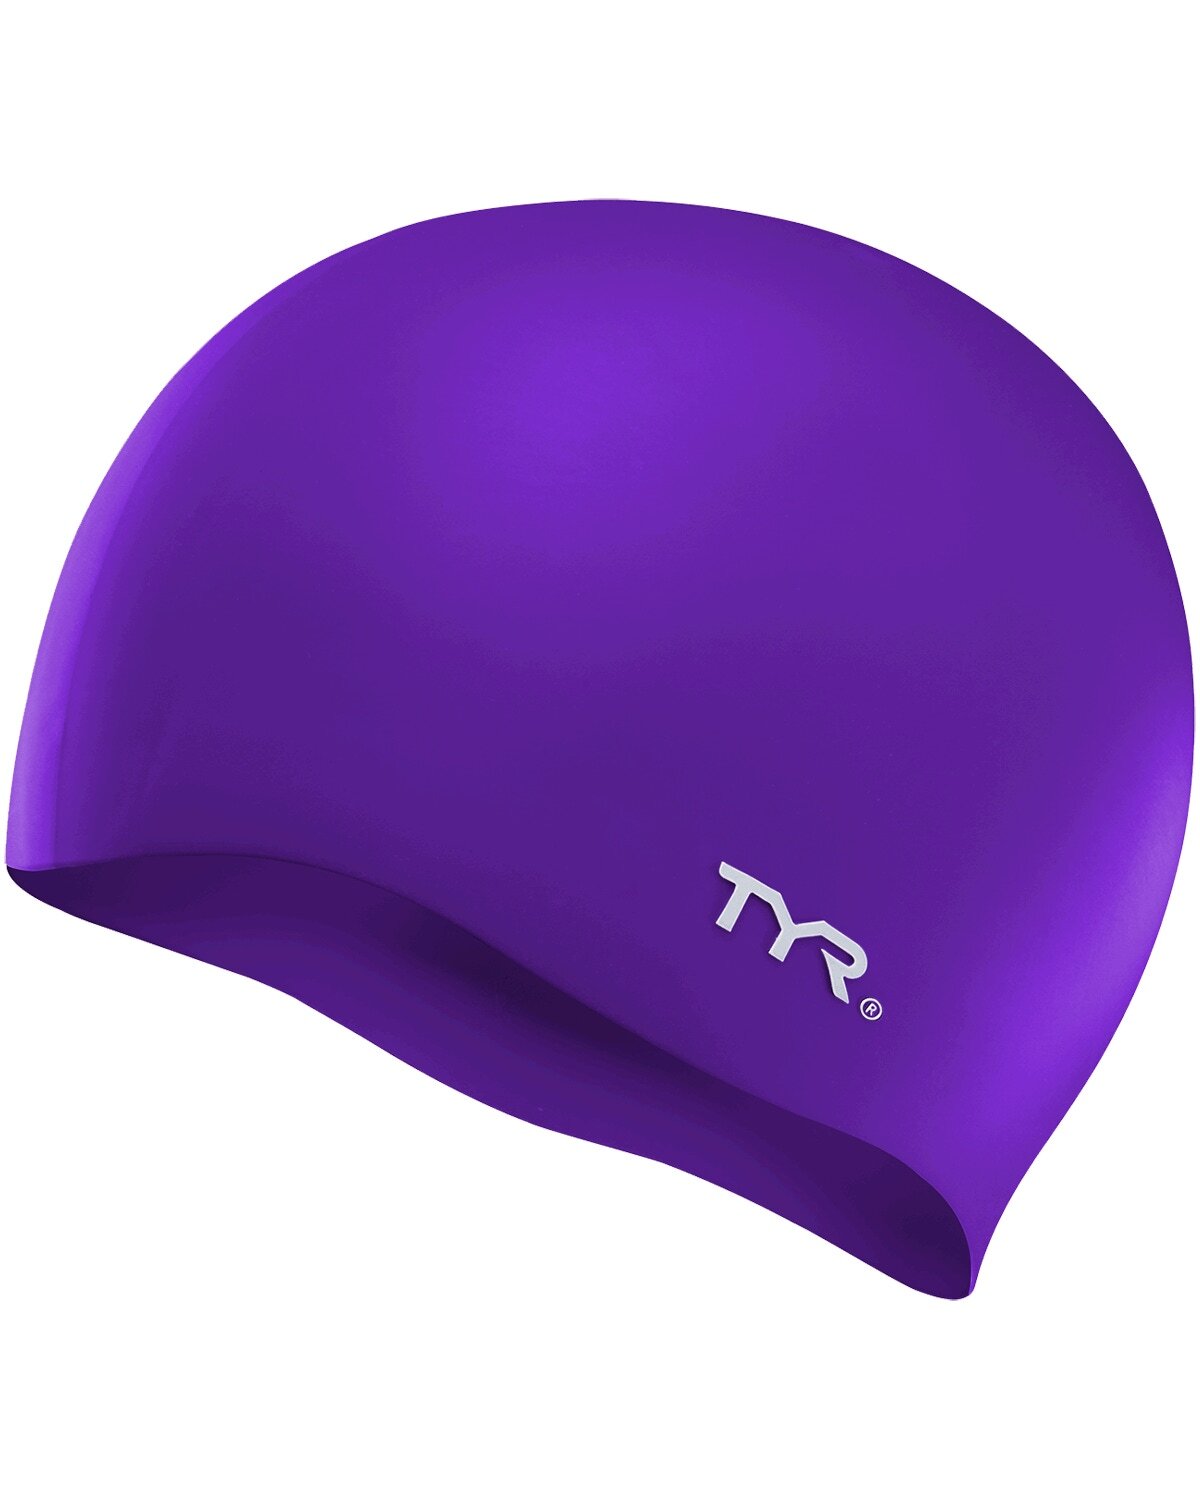 TYR Purple Wrinkle-Free Silicone Swim Cap